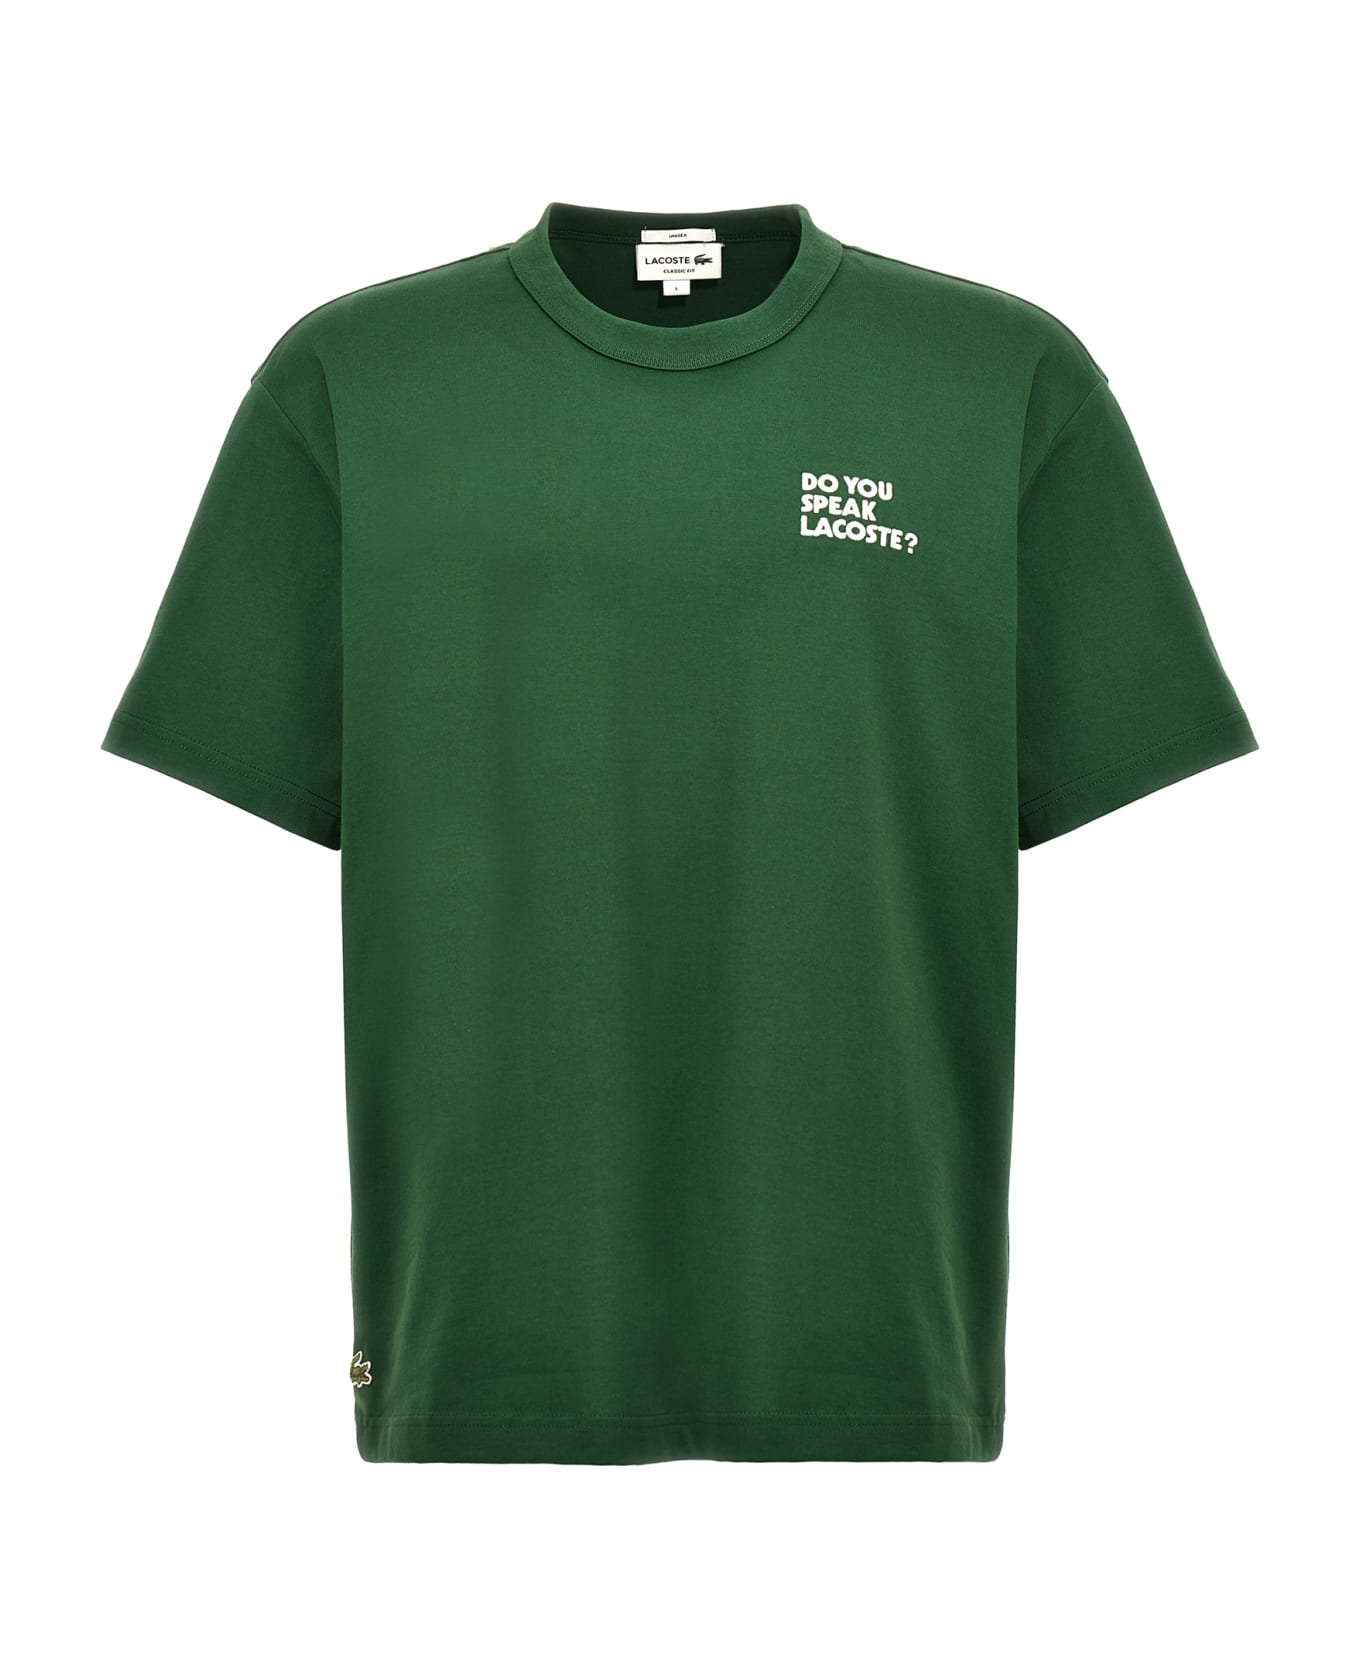 Lacoste 'do You Speak Lacoste?' T-shirt - Green